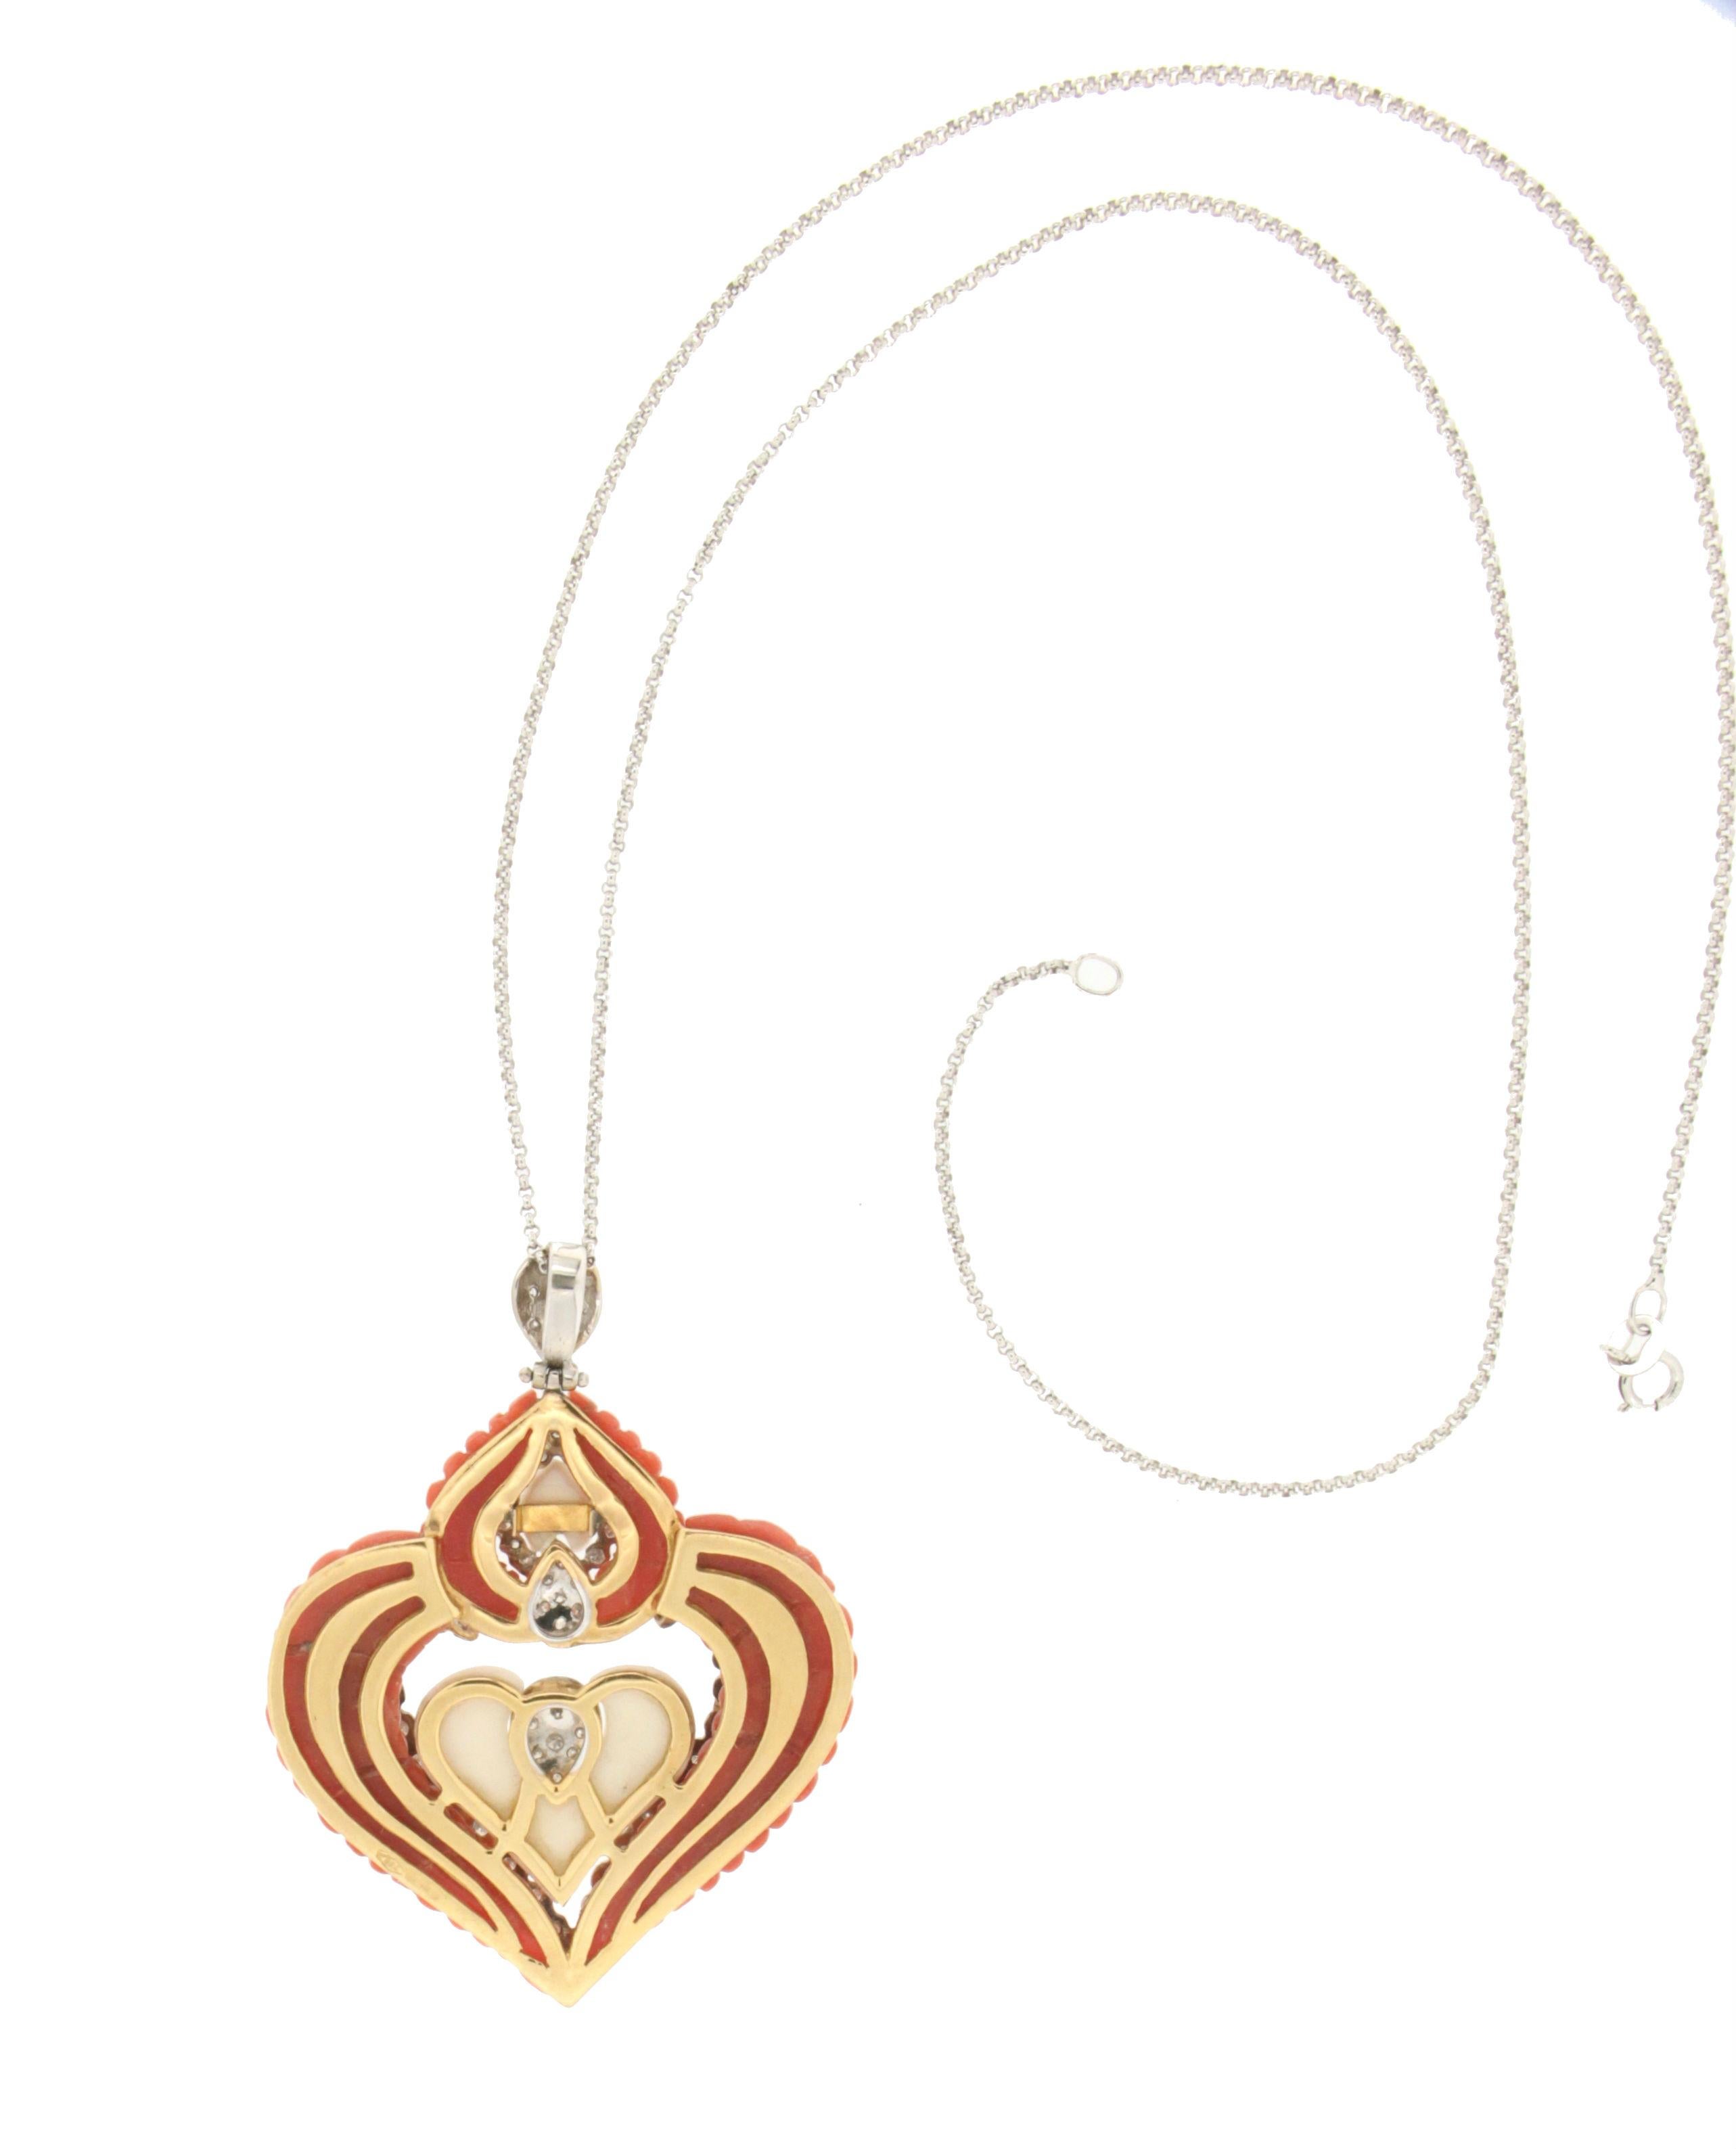 Brilliant Cut Handcraft Coral Heart 18 Karat White and Yellow Gold Diamonds Pendant Necklace